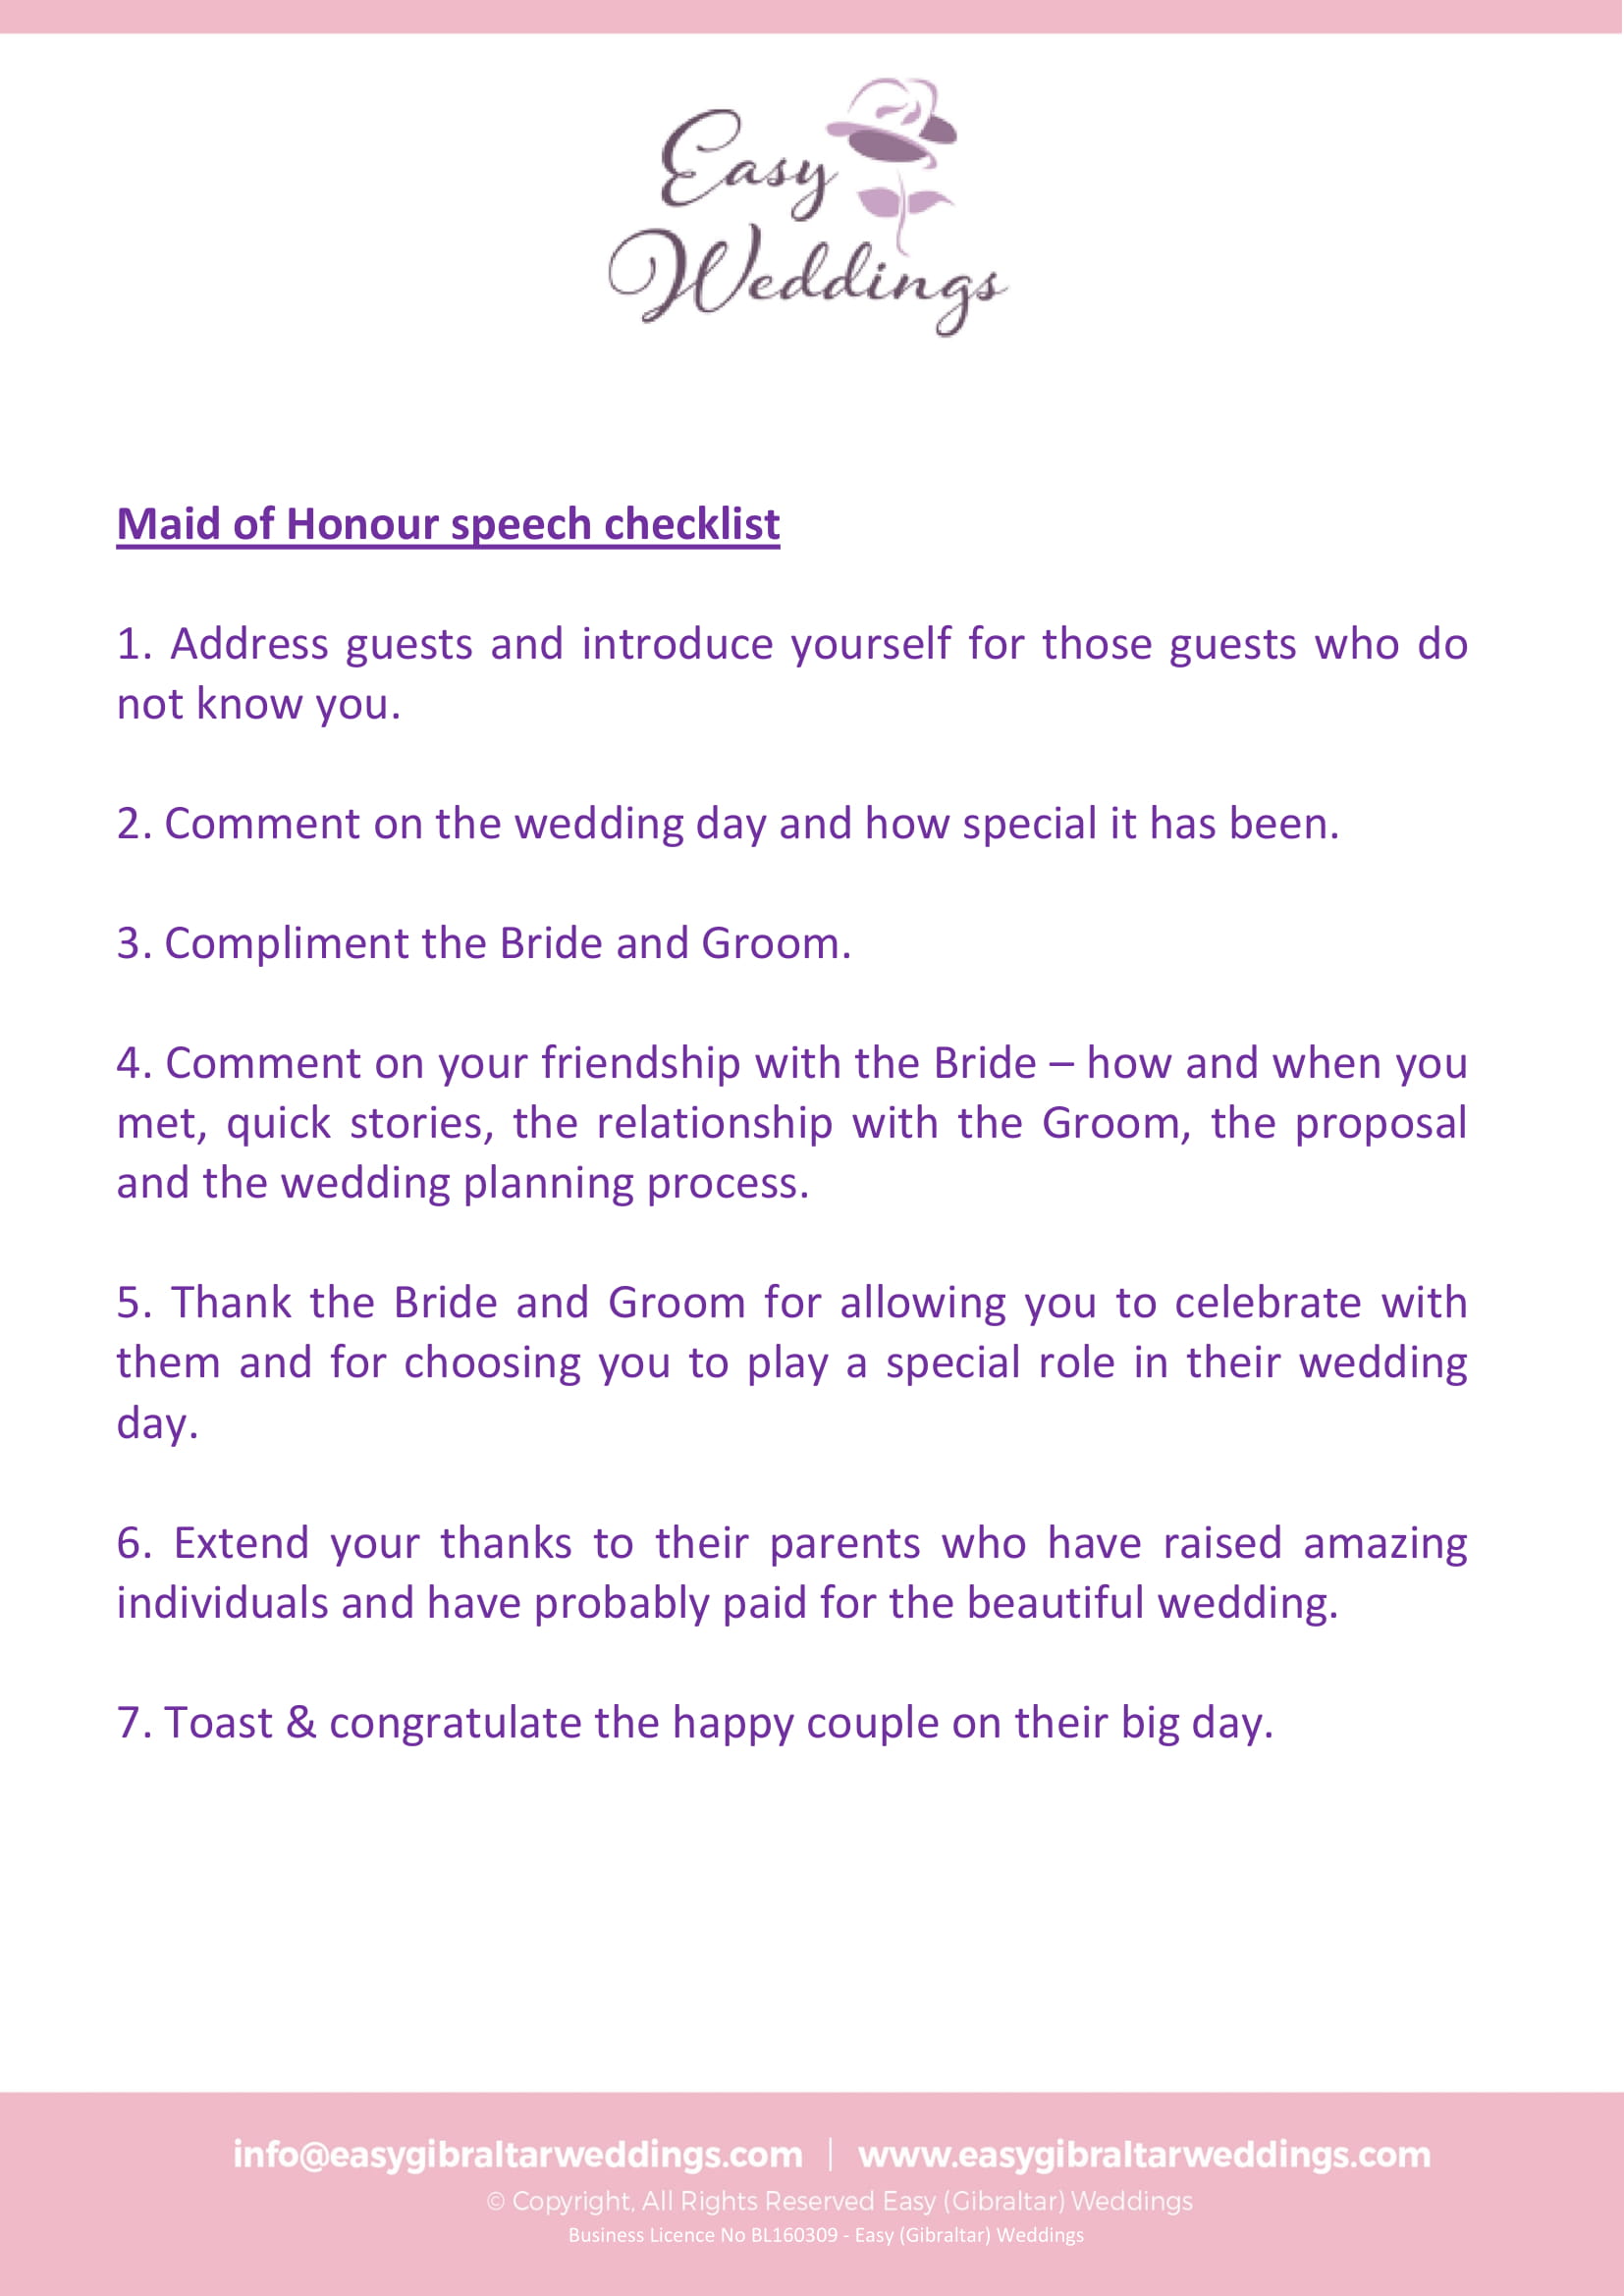 maid of honor speech checklist example